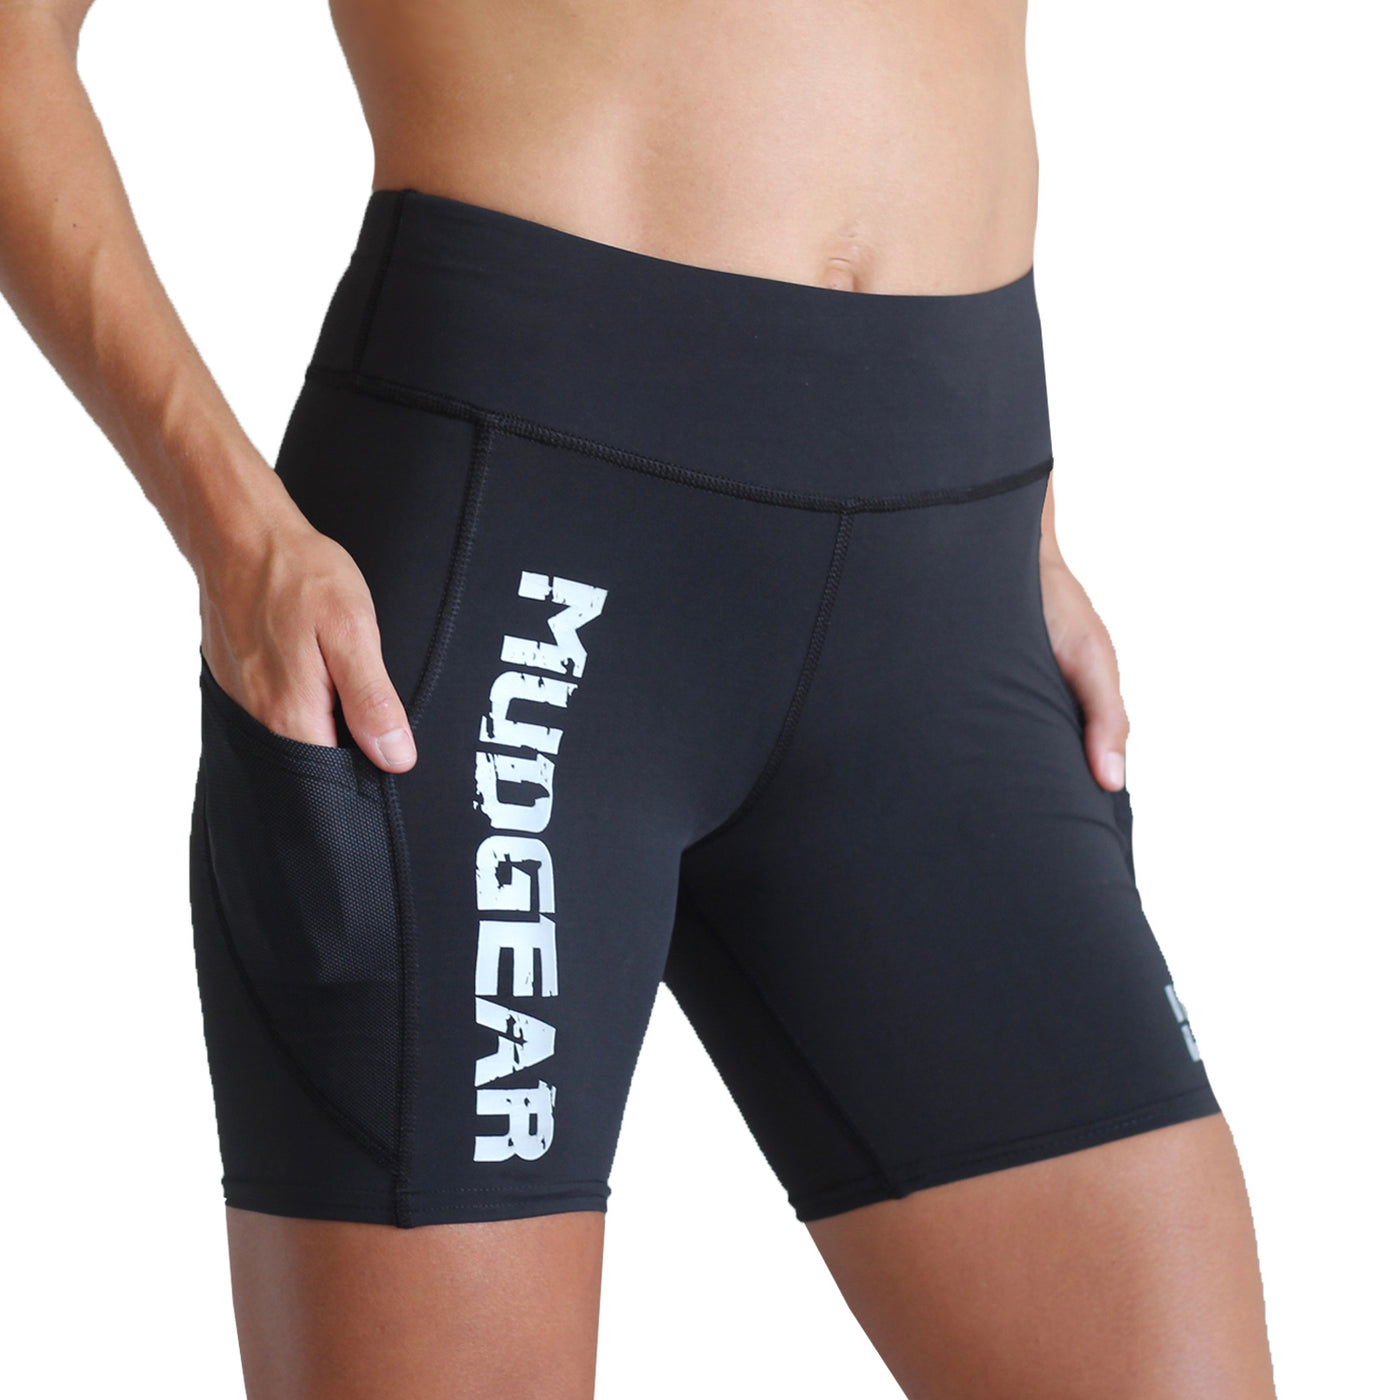 Mudgear - Women’s Flex fit compression shorts 6-inch inseam - Race Logo